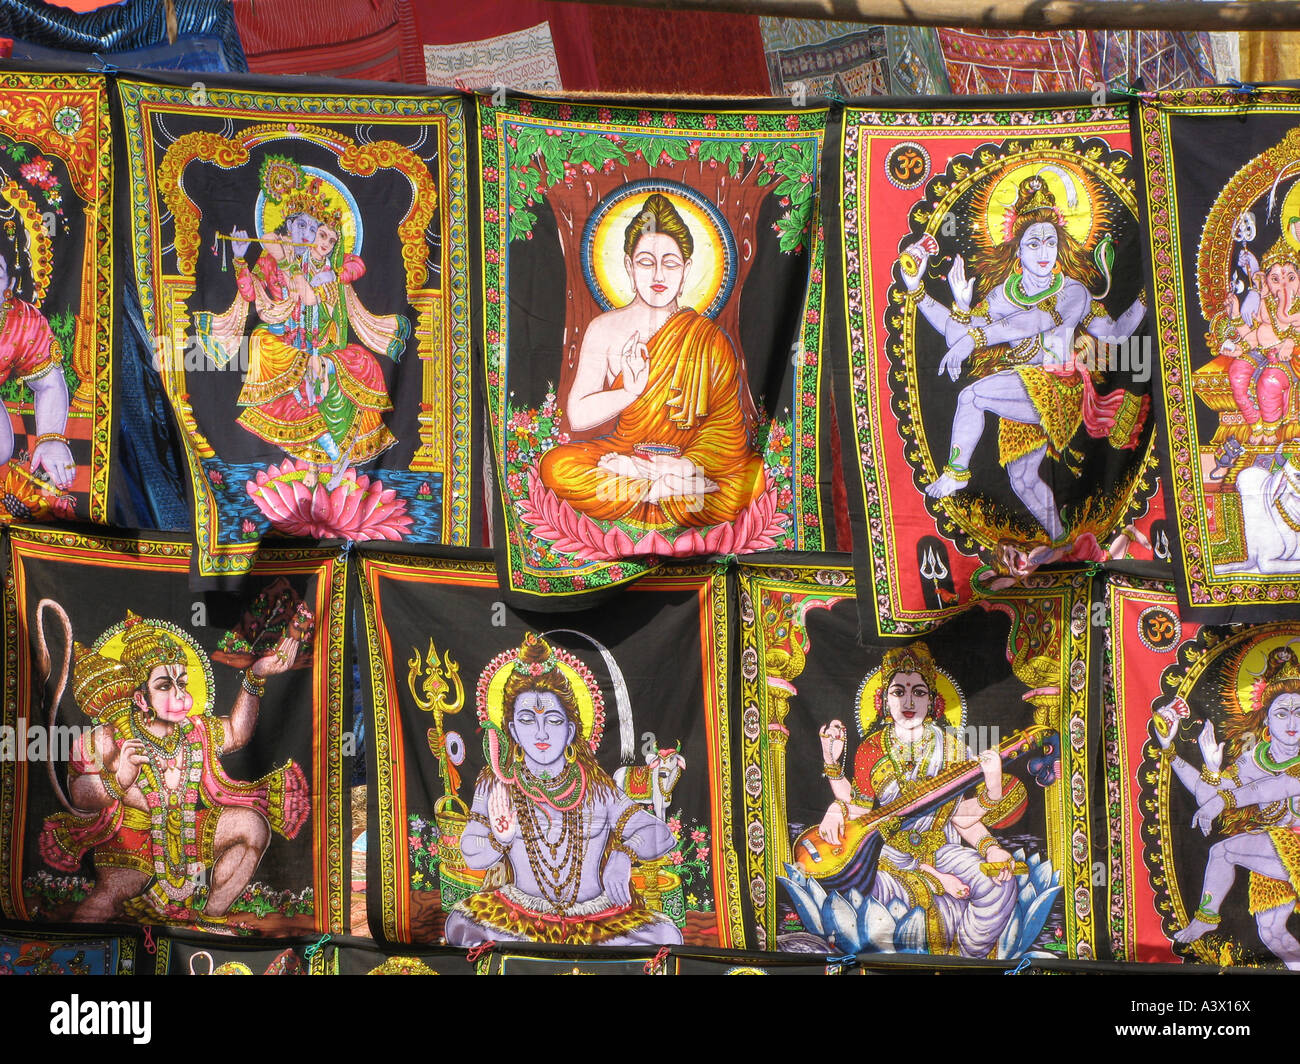 INDIA Garments with Hindu deities for sale in a Mumbai bazaar Photo Julio Etchart Stock Photo